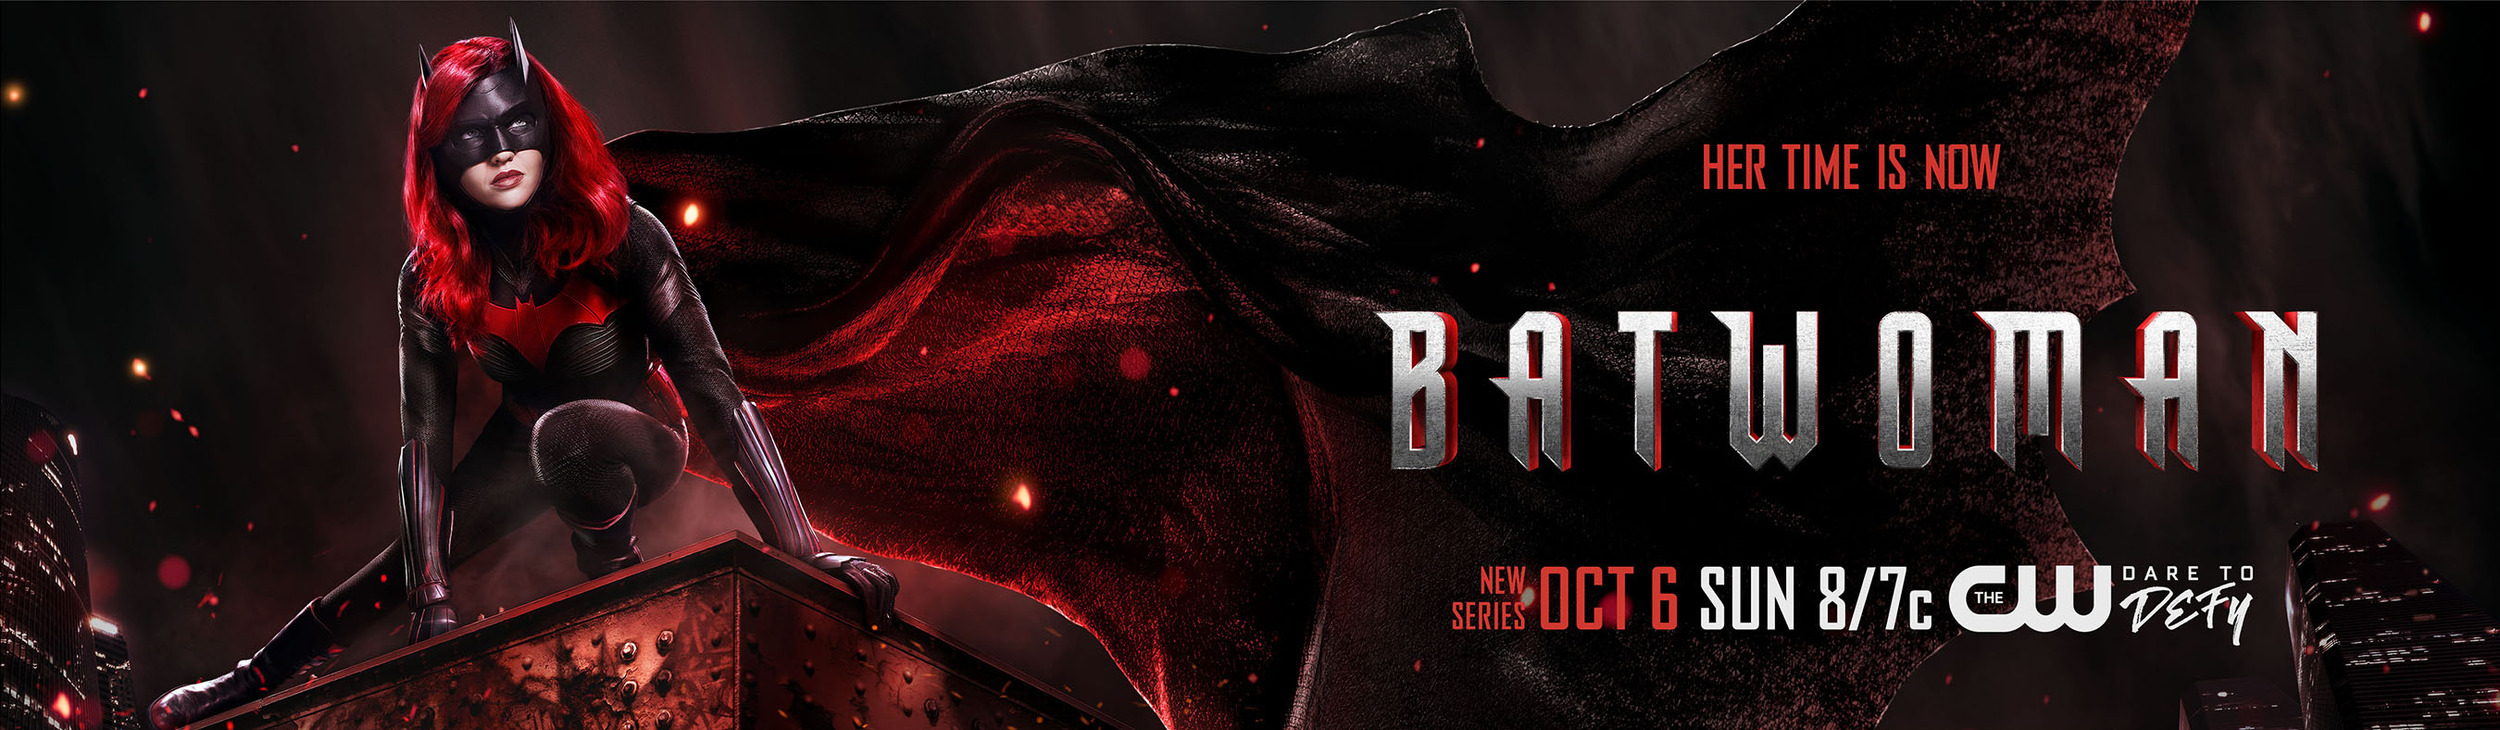 Mega Sized TV Poster Image for Batwoman (#5 of 30)